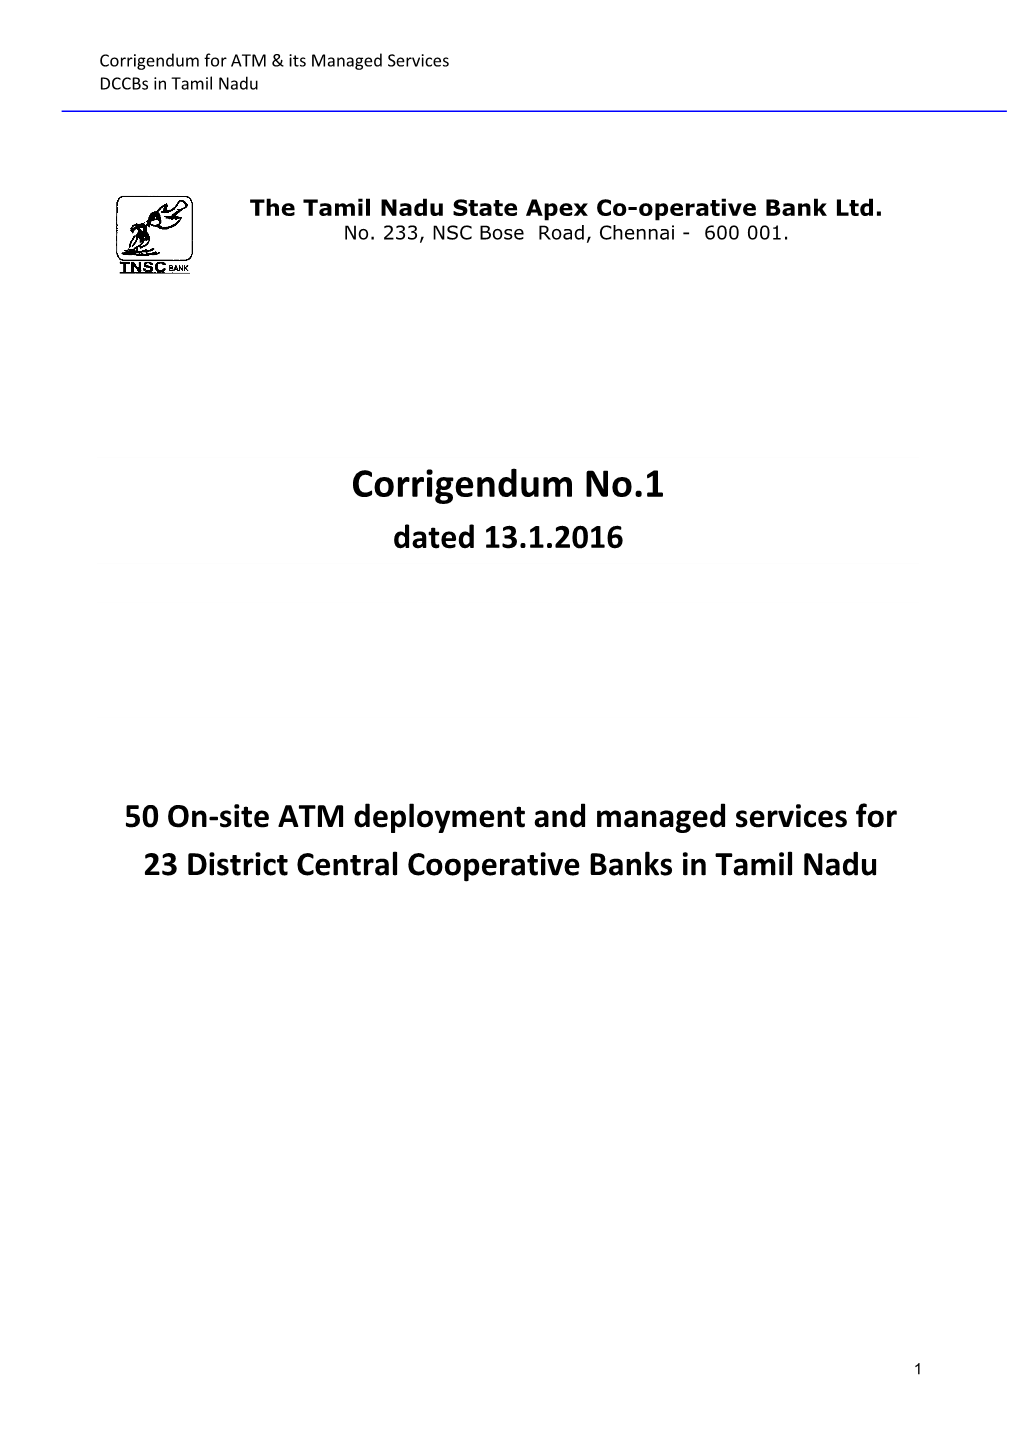 DCCB-Atms-Corrigendum No-1